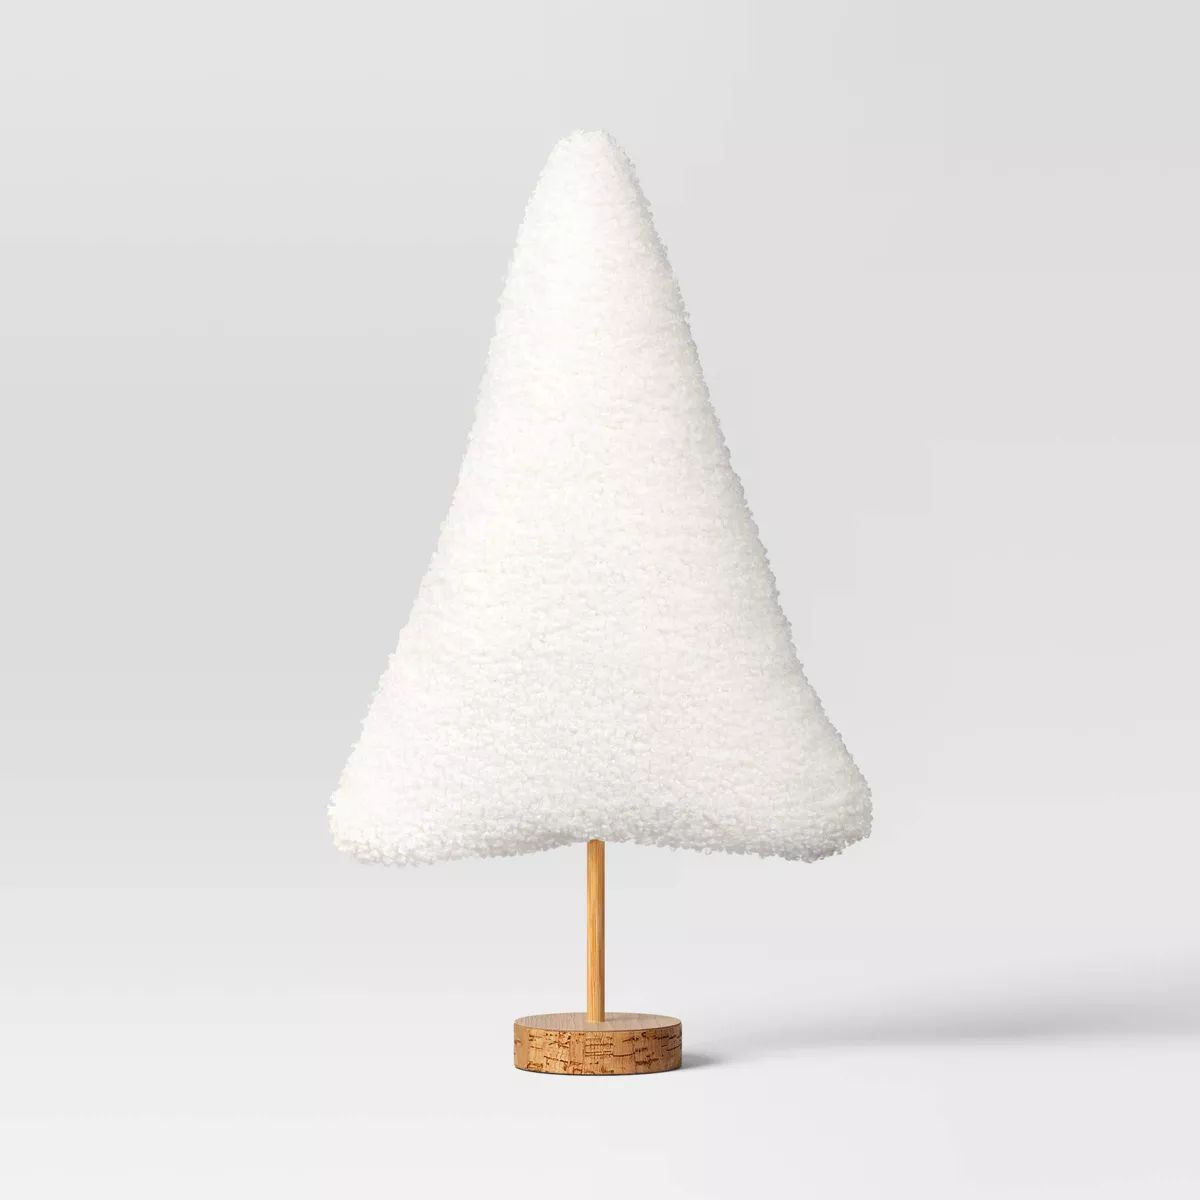 15.5" Faux Shearling Fabric Christmas Tree with Wood Base Figurine - Wondershop™ White | Target